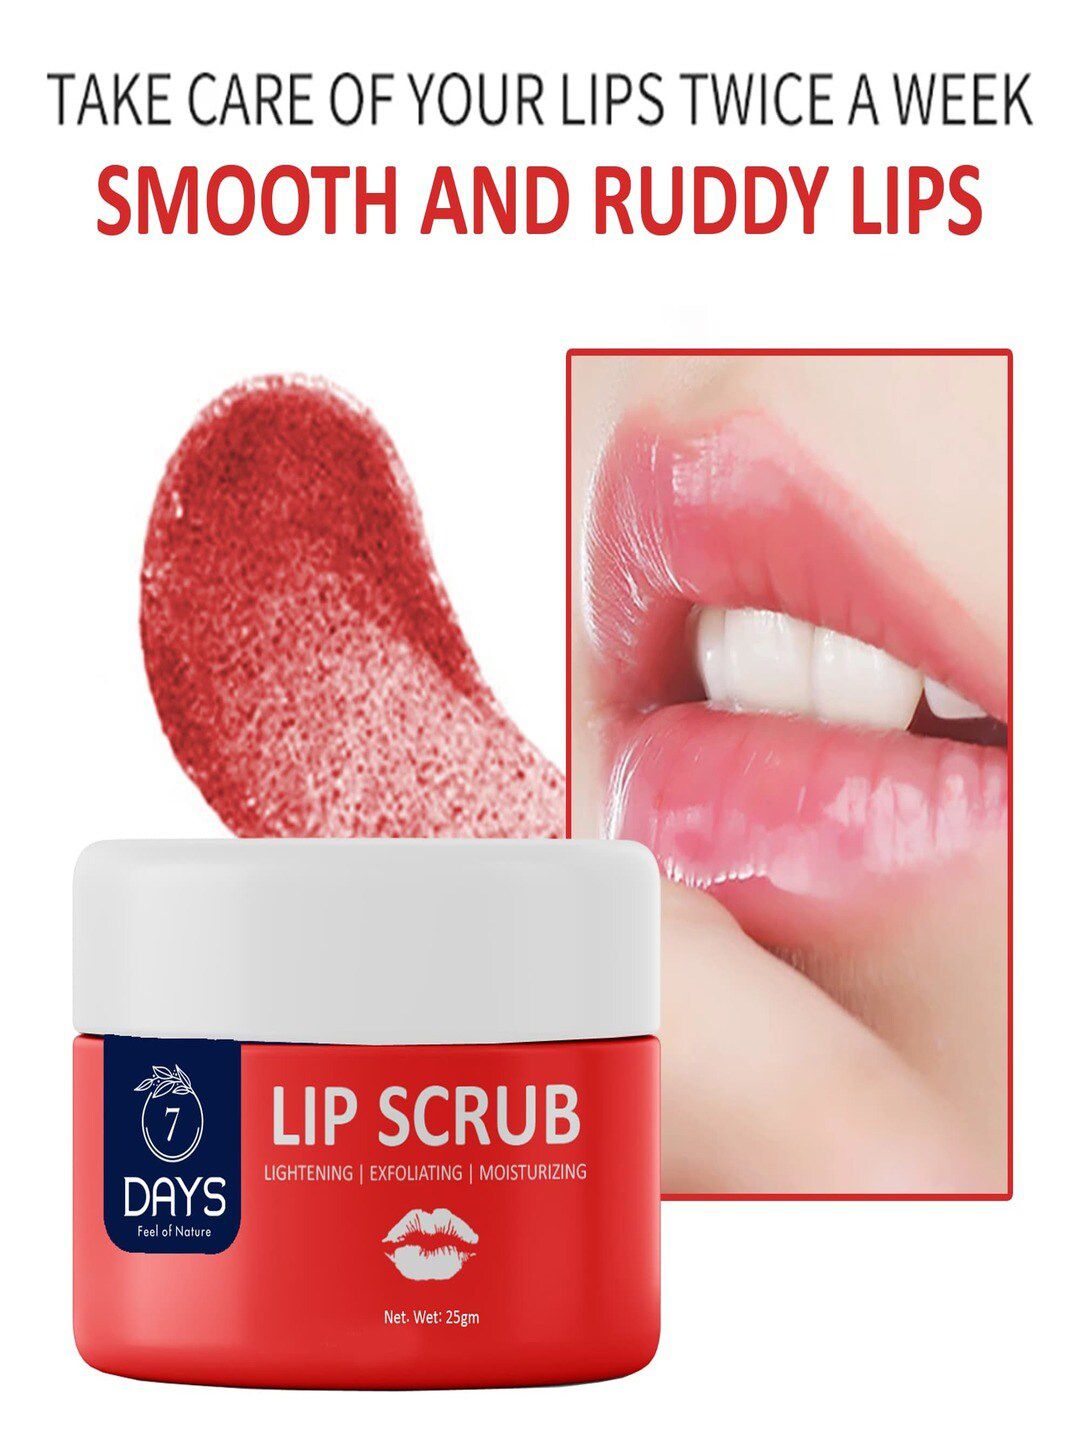 7 DAYS Lip Scrub for Lightening & Brightening Dark Lips - 25g Price in India